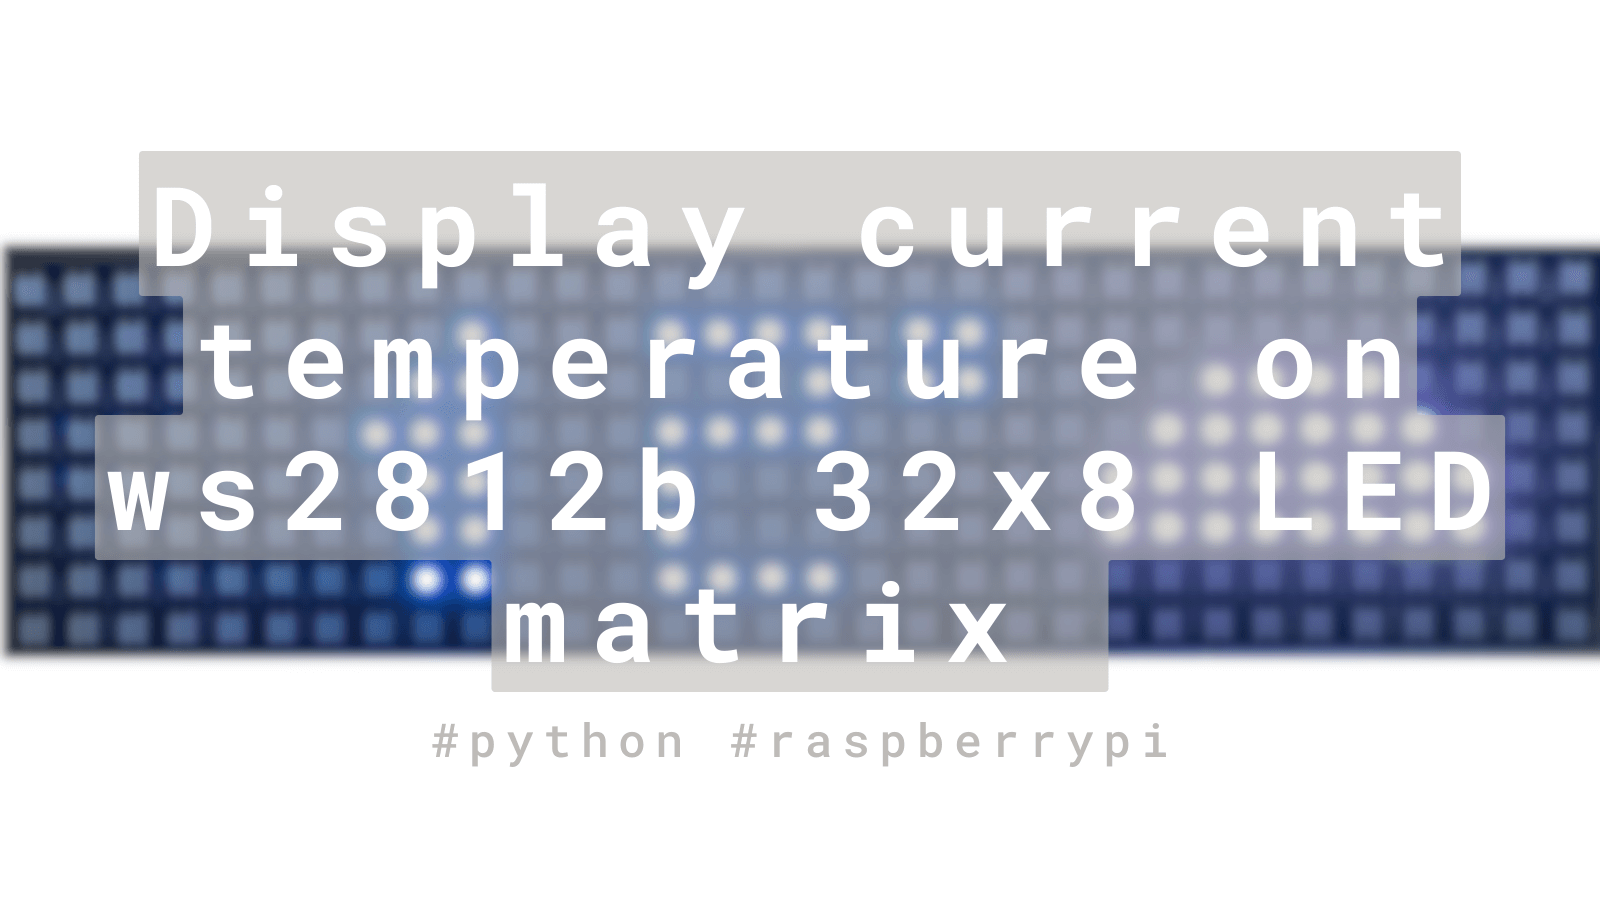 Display temperature on LED matrix